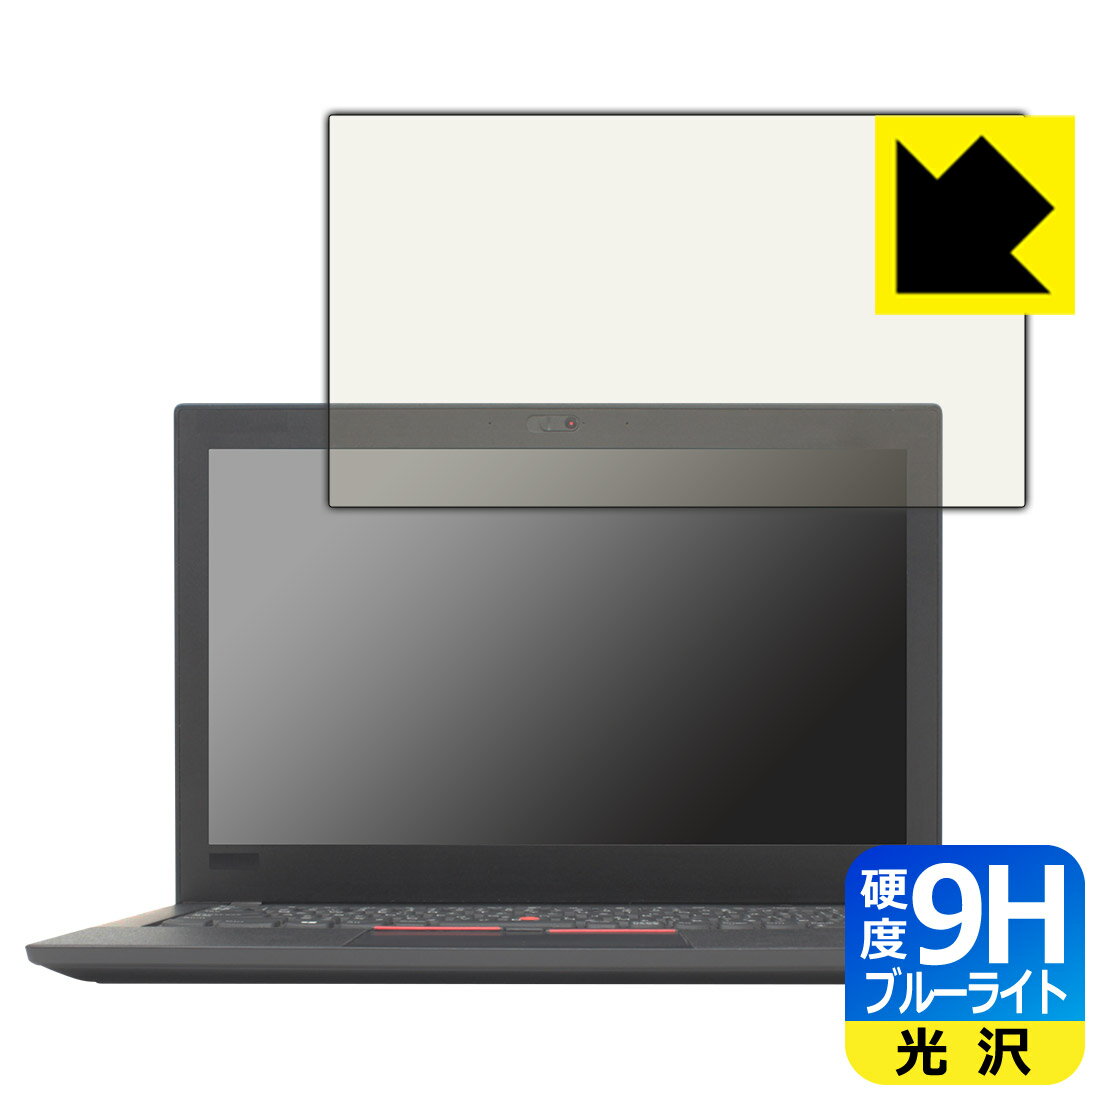 9H高硬度【ブルーライトカット】保護フィルム ThinkPad X280 日本製 自社製造直販